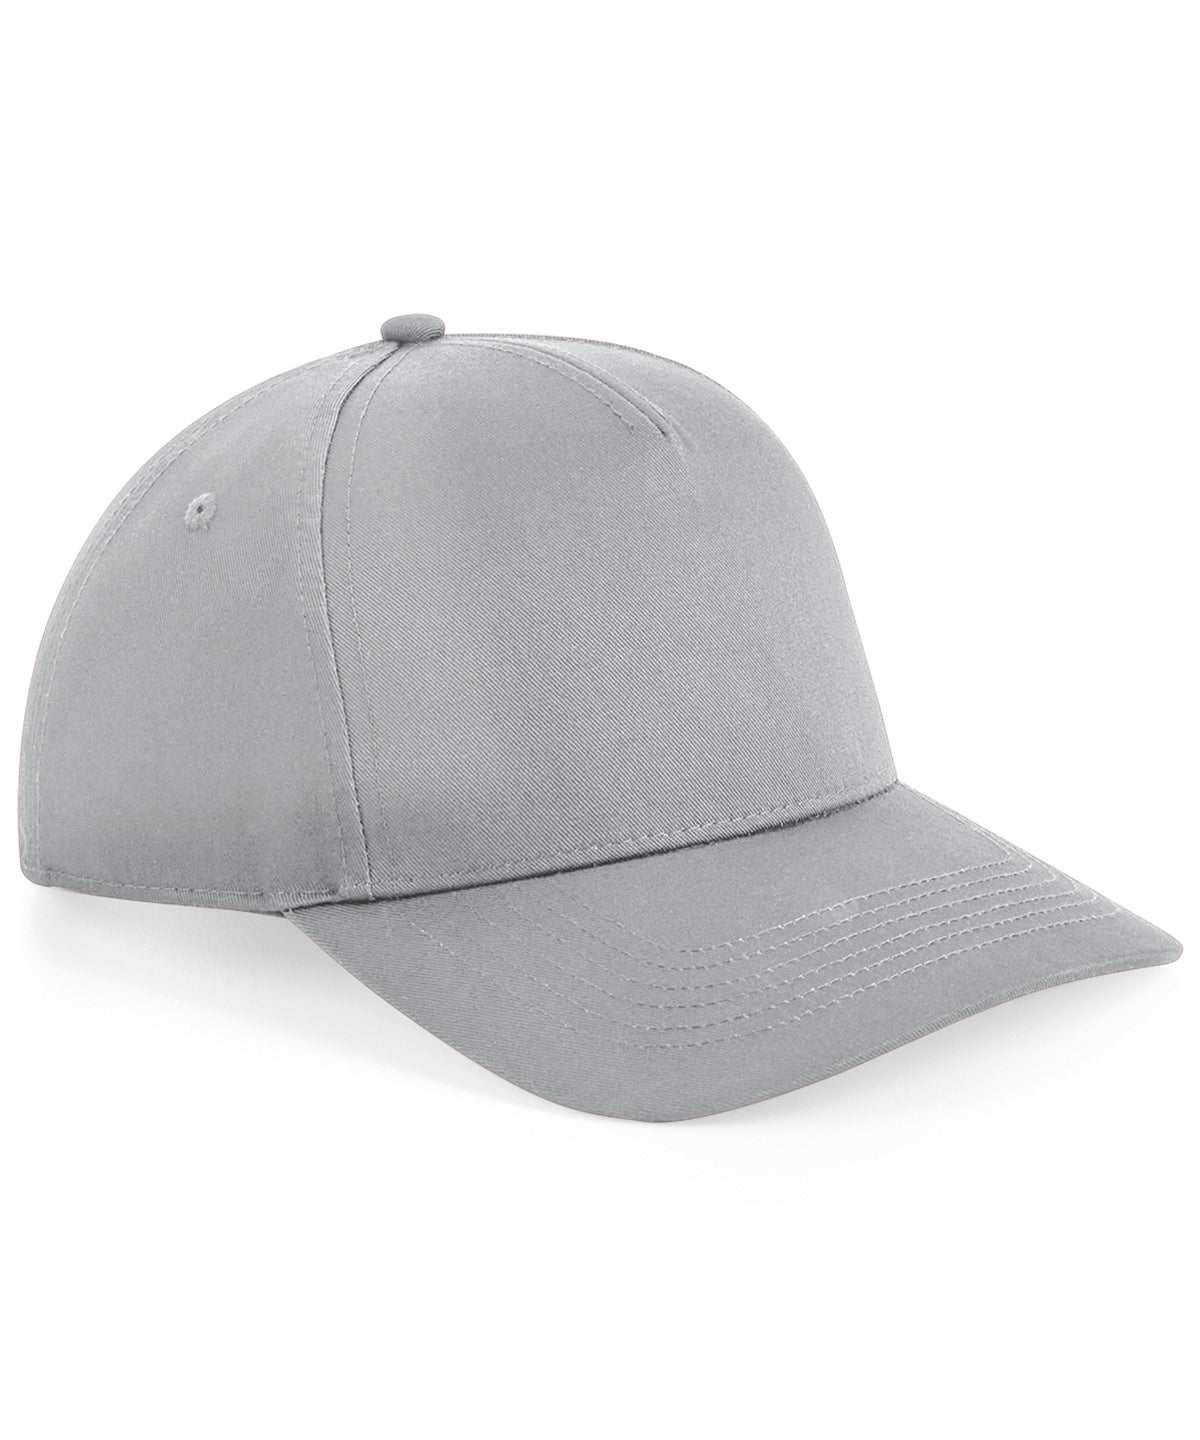 Personalised Caps - Light Grey Beechfield Urbanwear 5-panel snapback